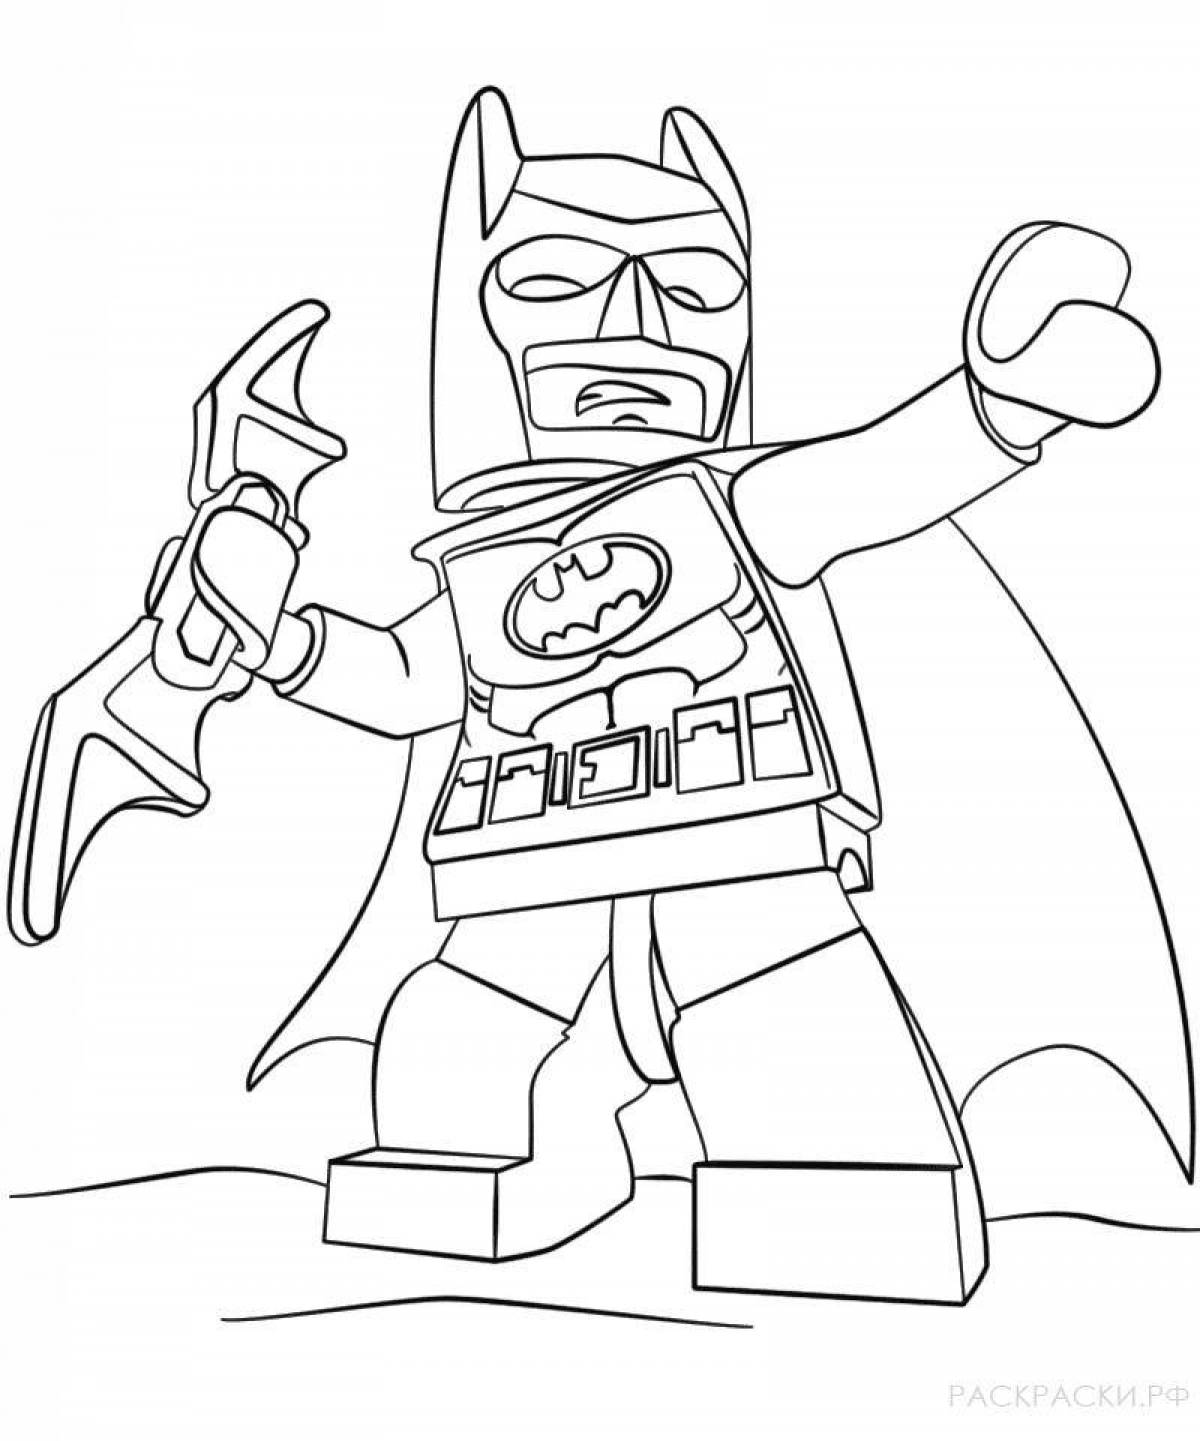 Colorful lego batman coloring page